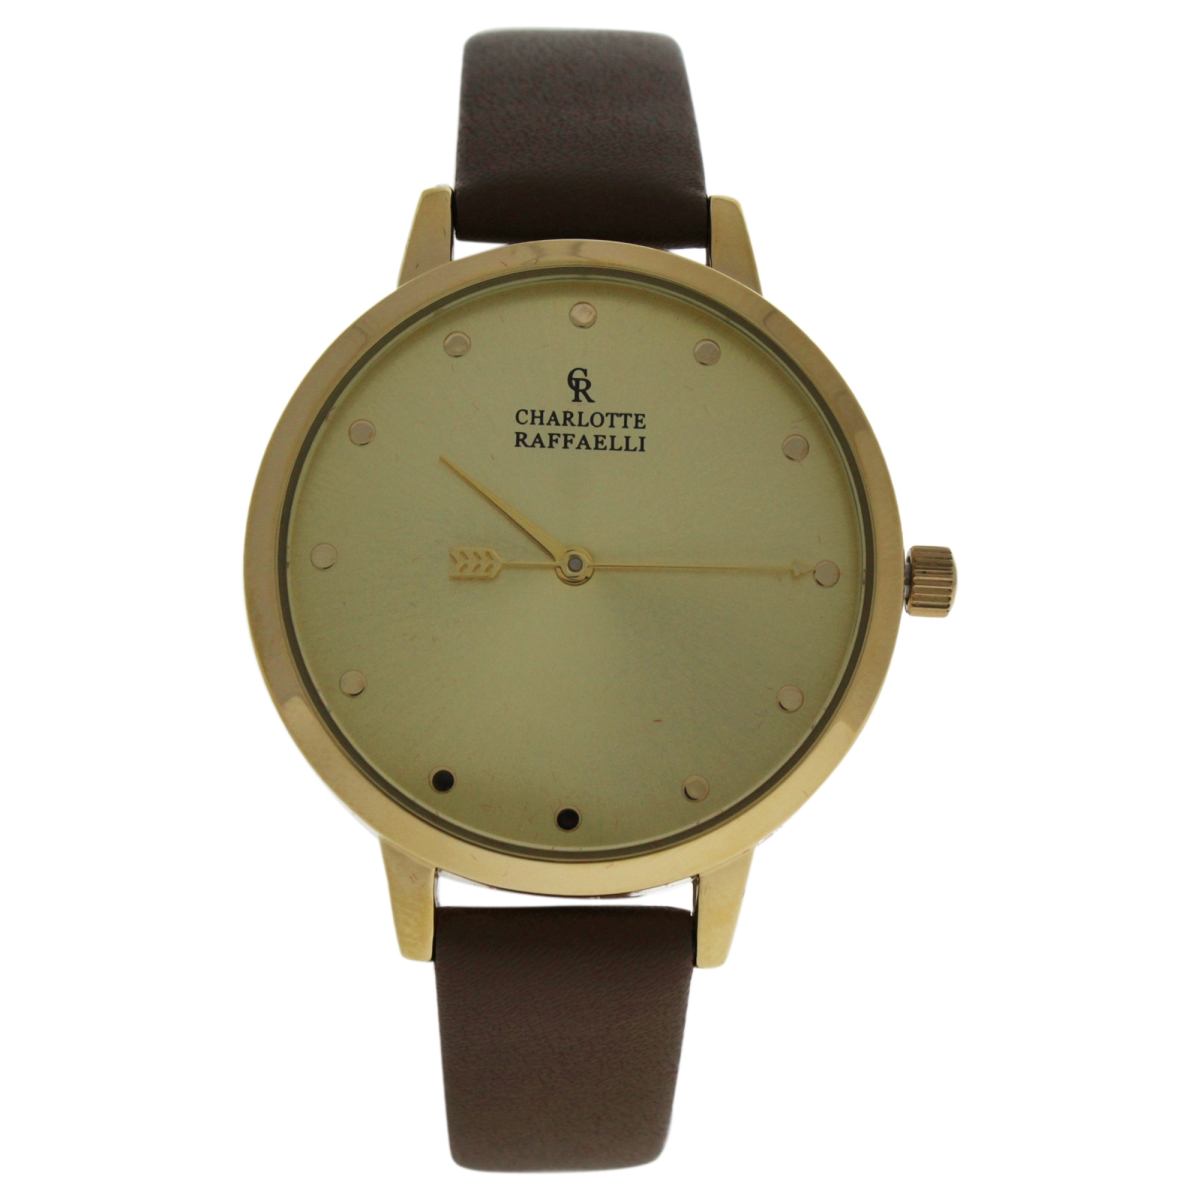 W-wat-1508 La Basic - Gold & Brown Leather Strap Watch For Women - Crb005